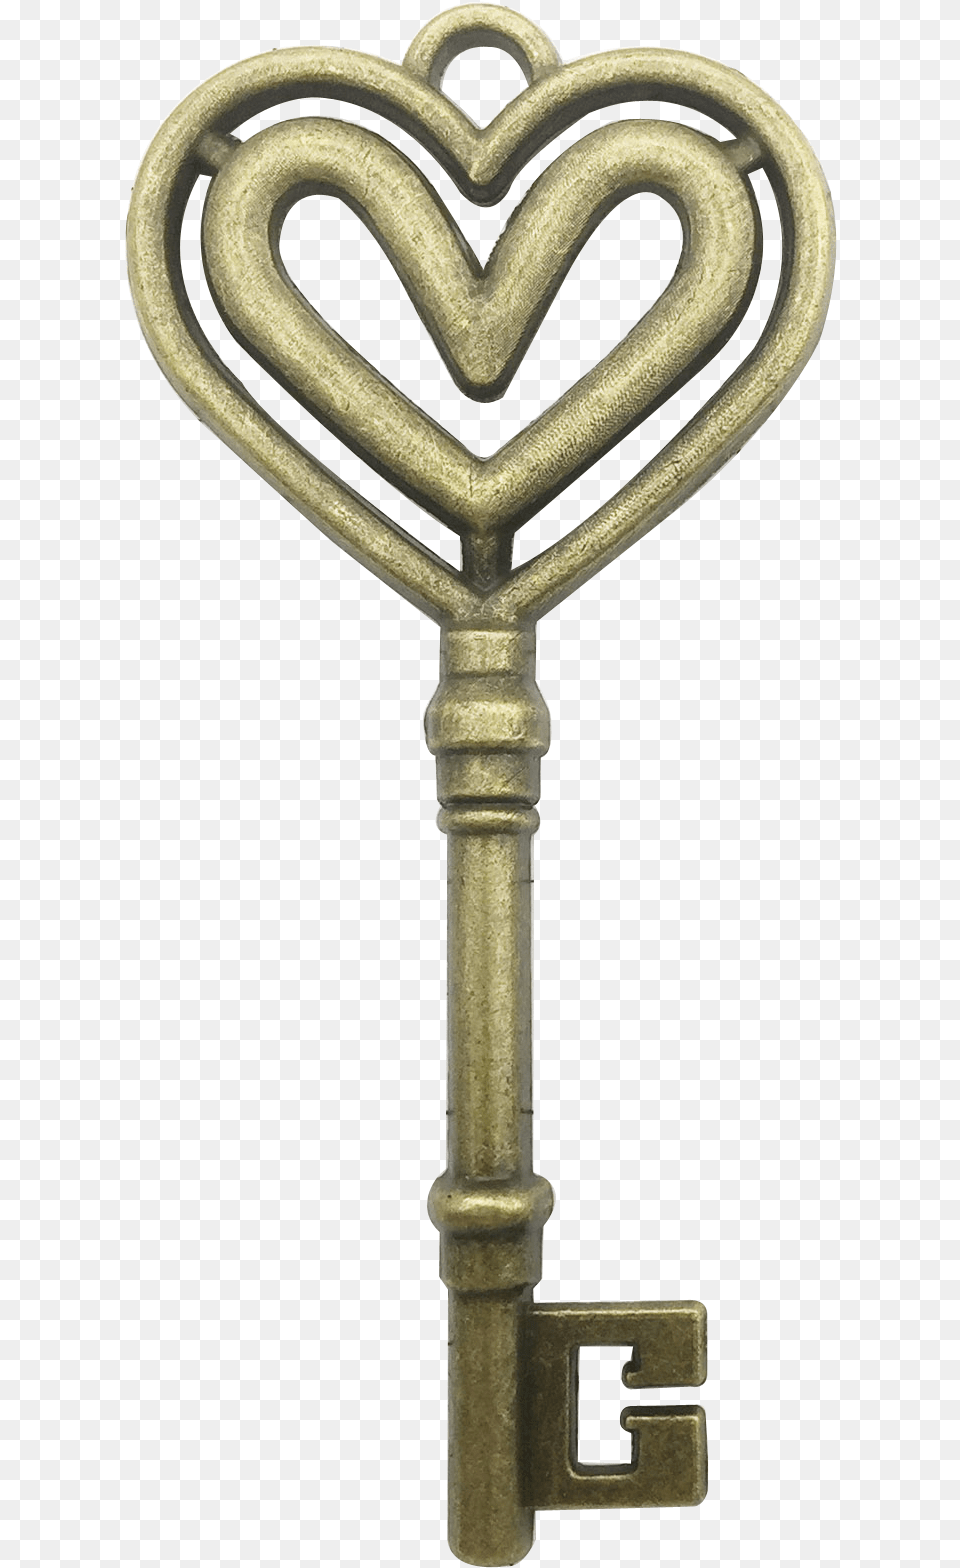 Heart, Key, Cross, Symbol Png Image